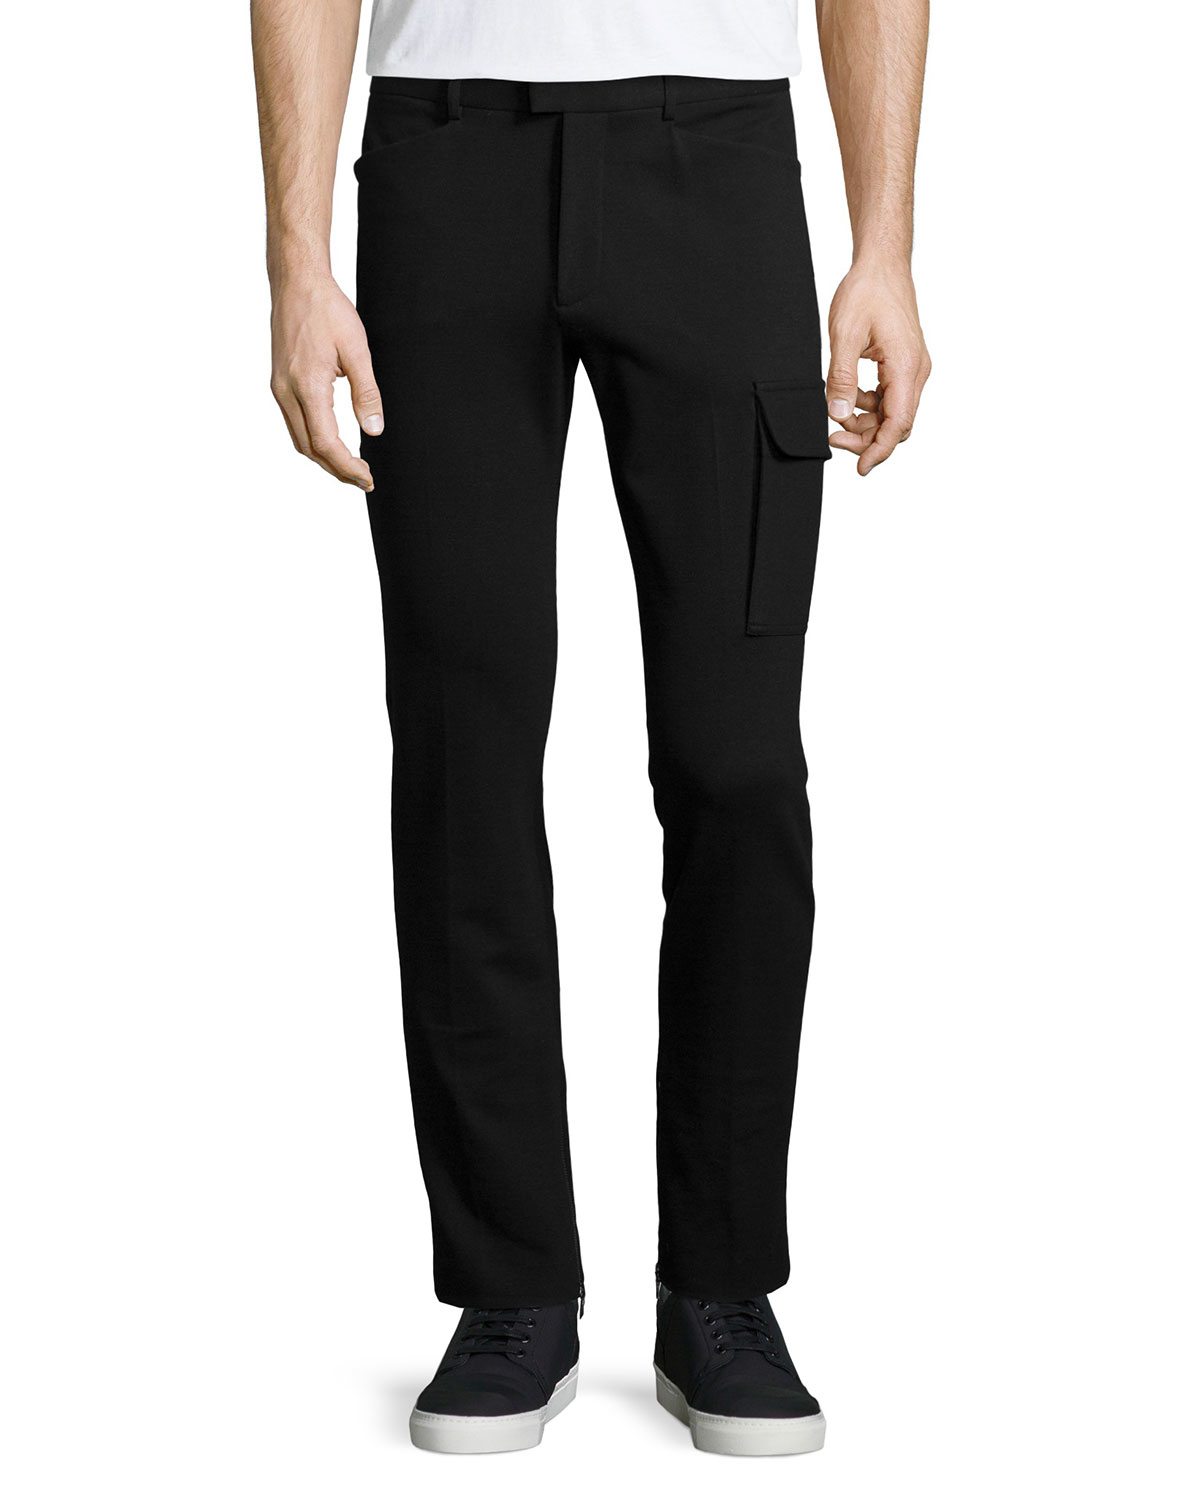 Lyst - Atm Slim-fit Stretch Cargo Pants in Black for Men